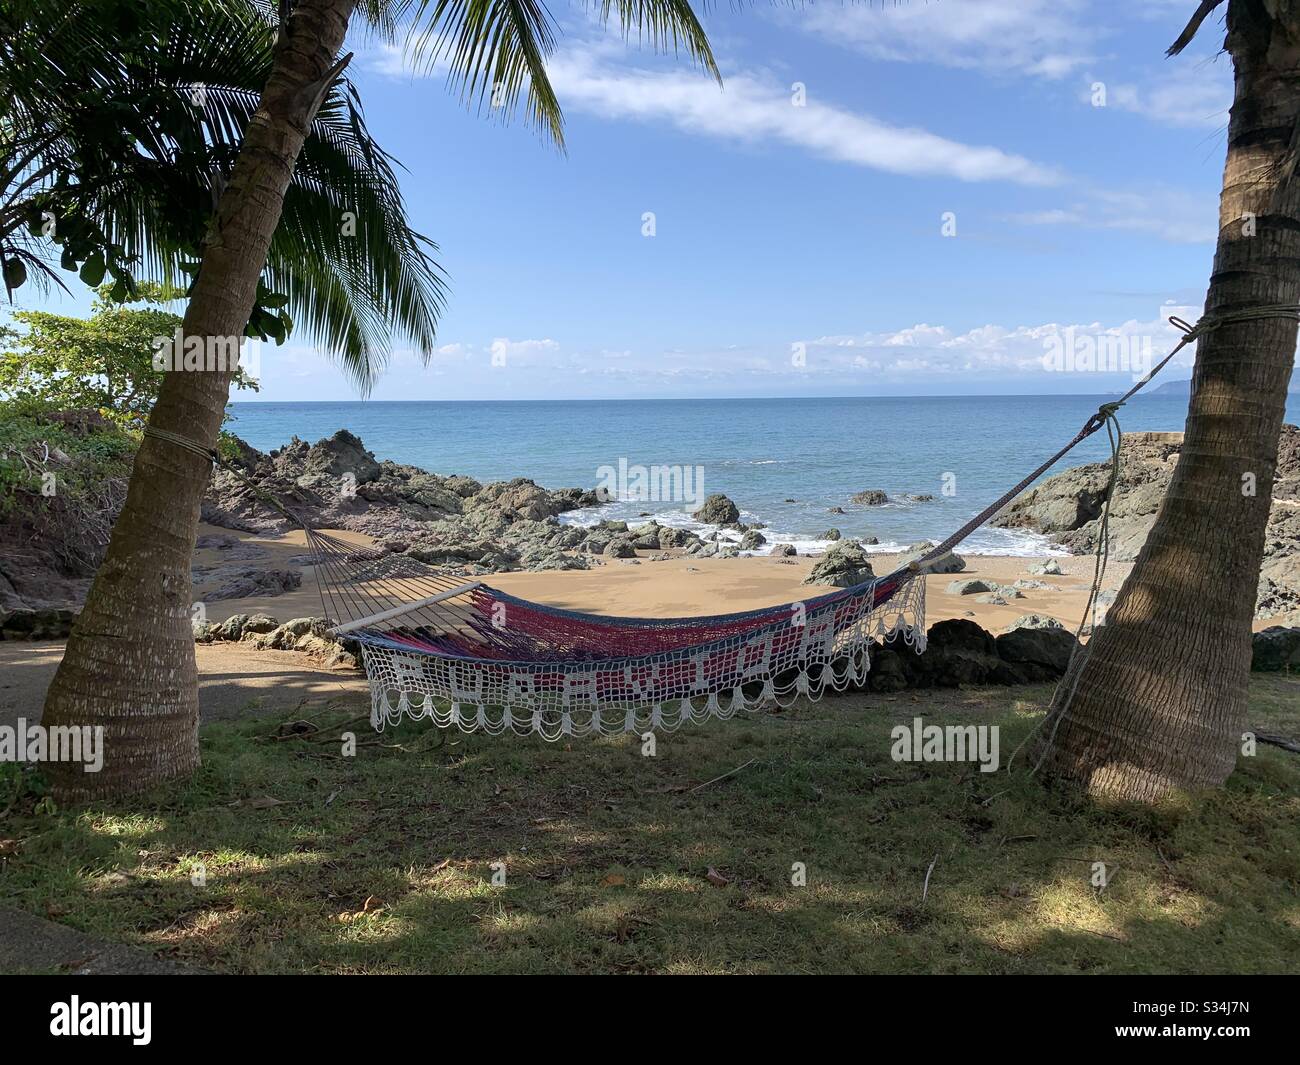 Hammock on a remote Costa Rican beach Stock Photo